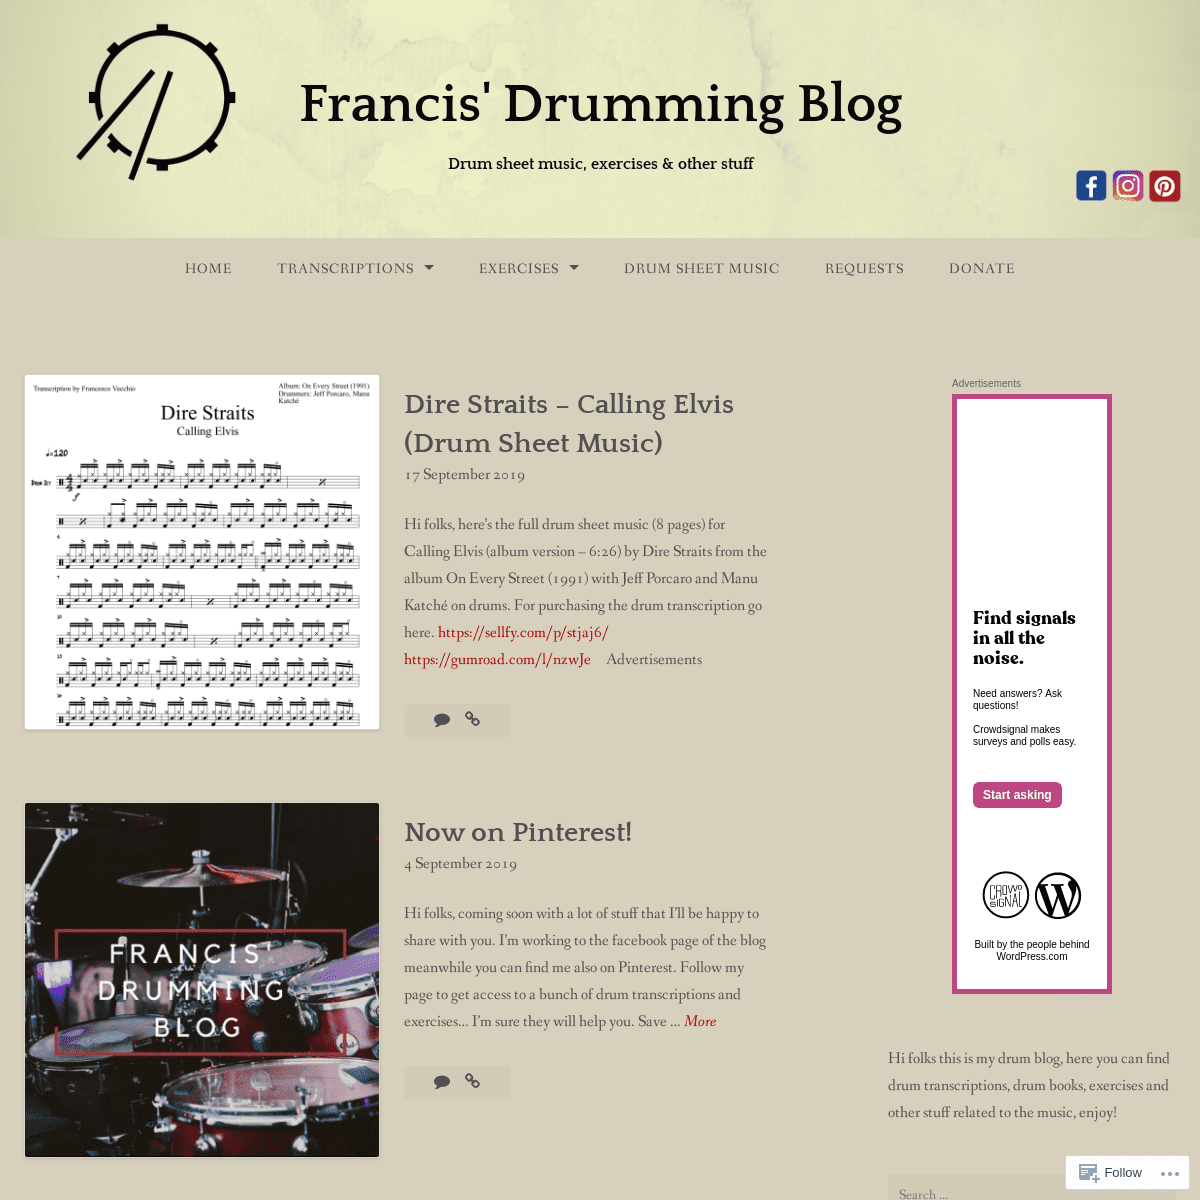 Francis' Drumming Blog – Drum sheet music, exercises & other stuff